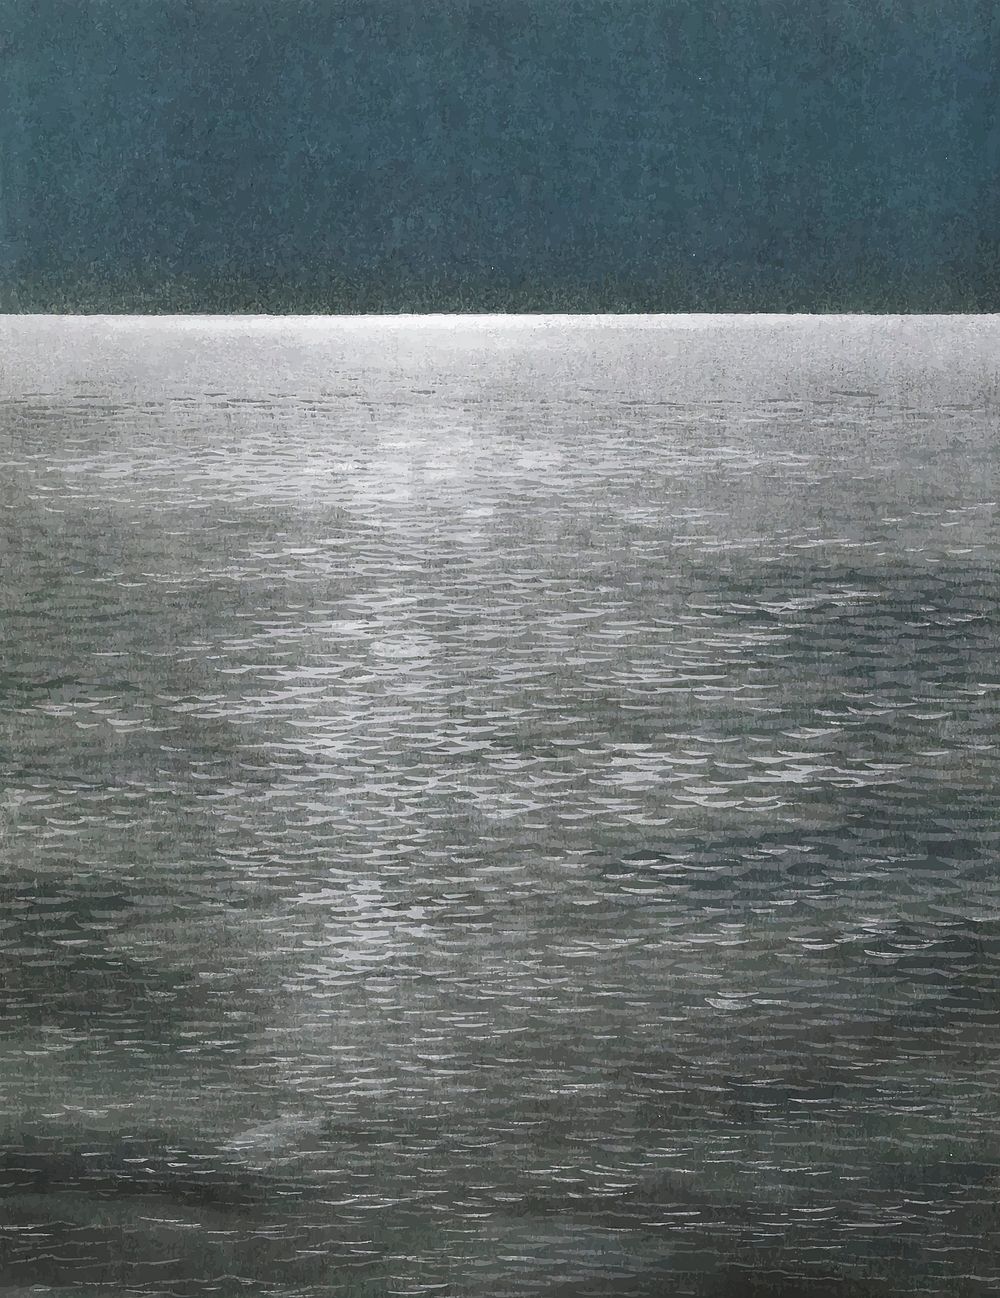 White light reflecting on the sea vintage illustration vector, remix from original artwork.